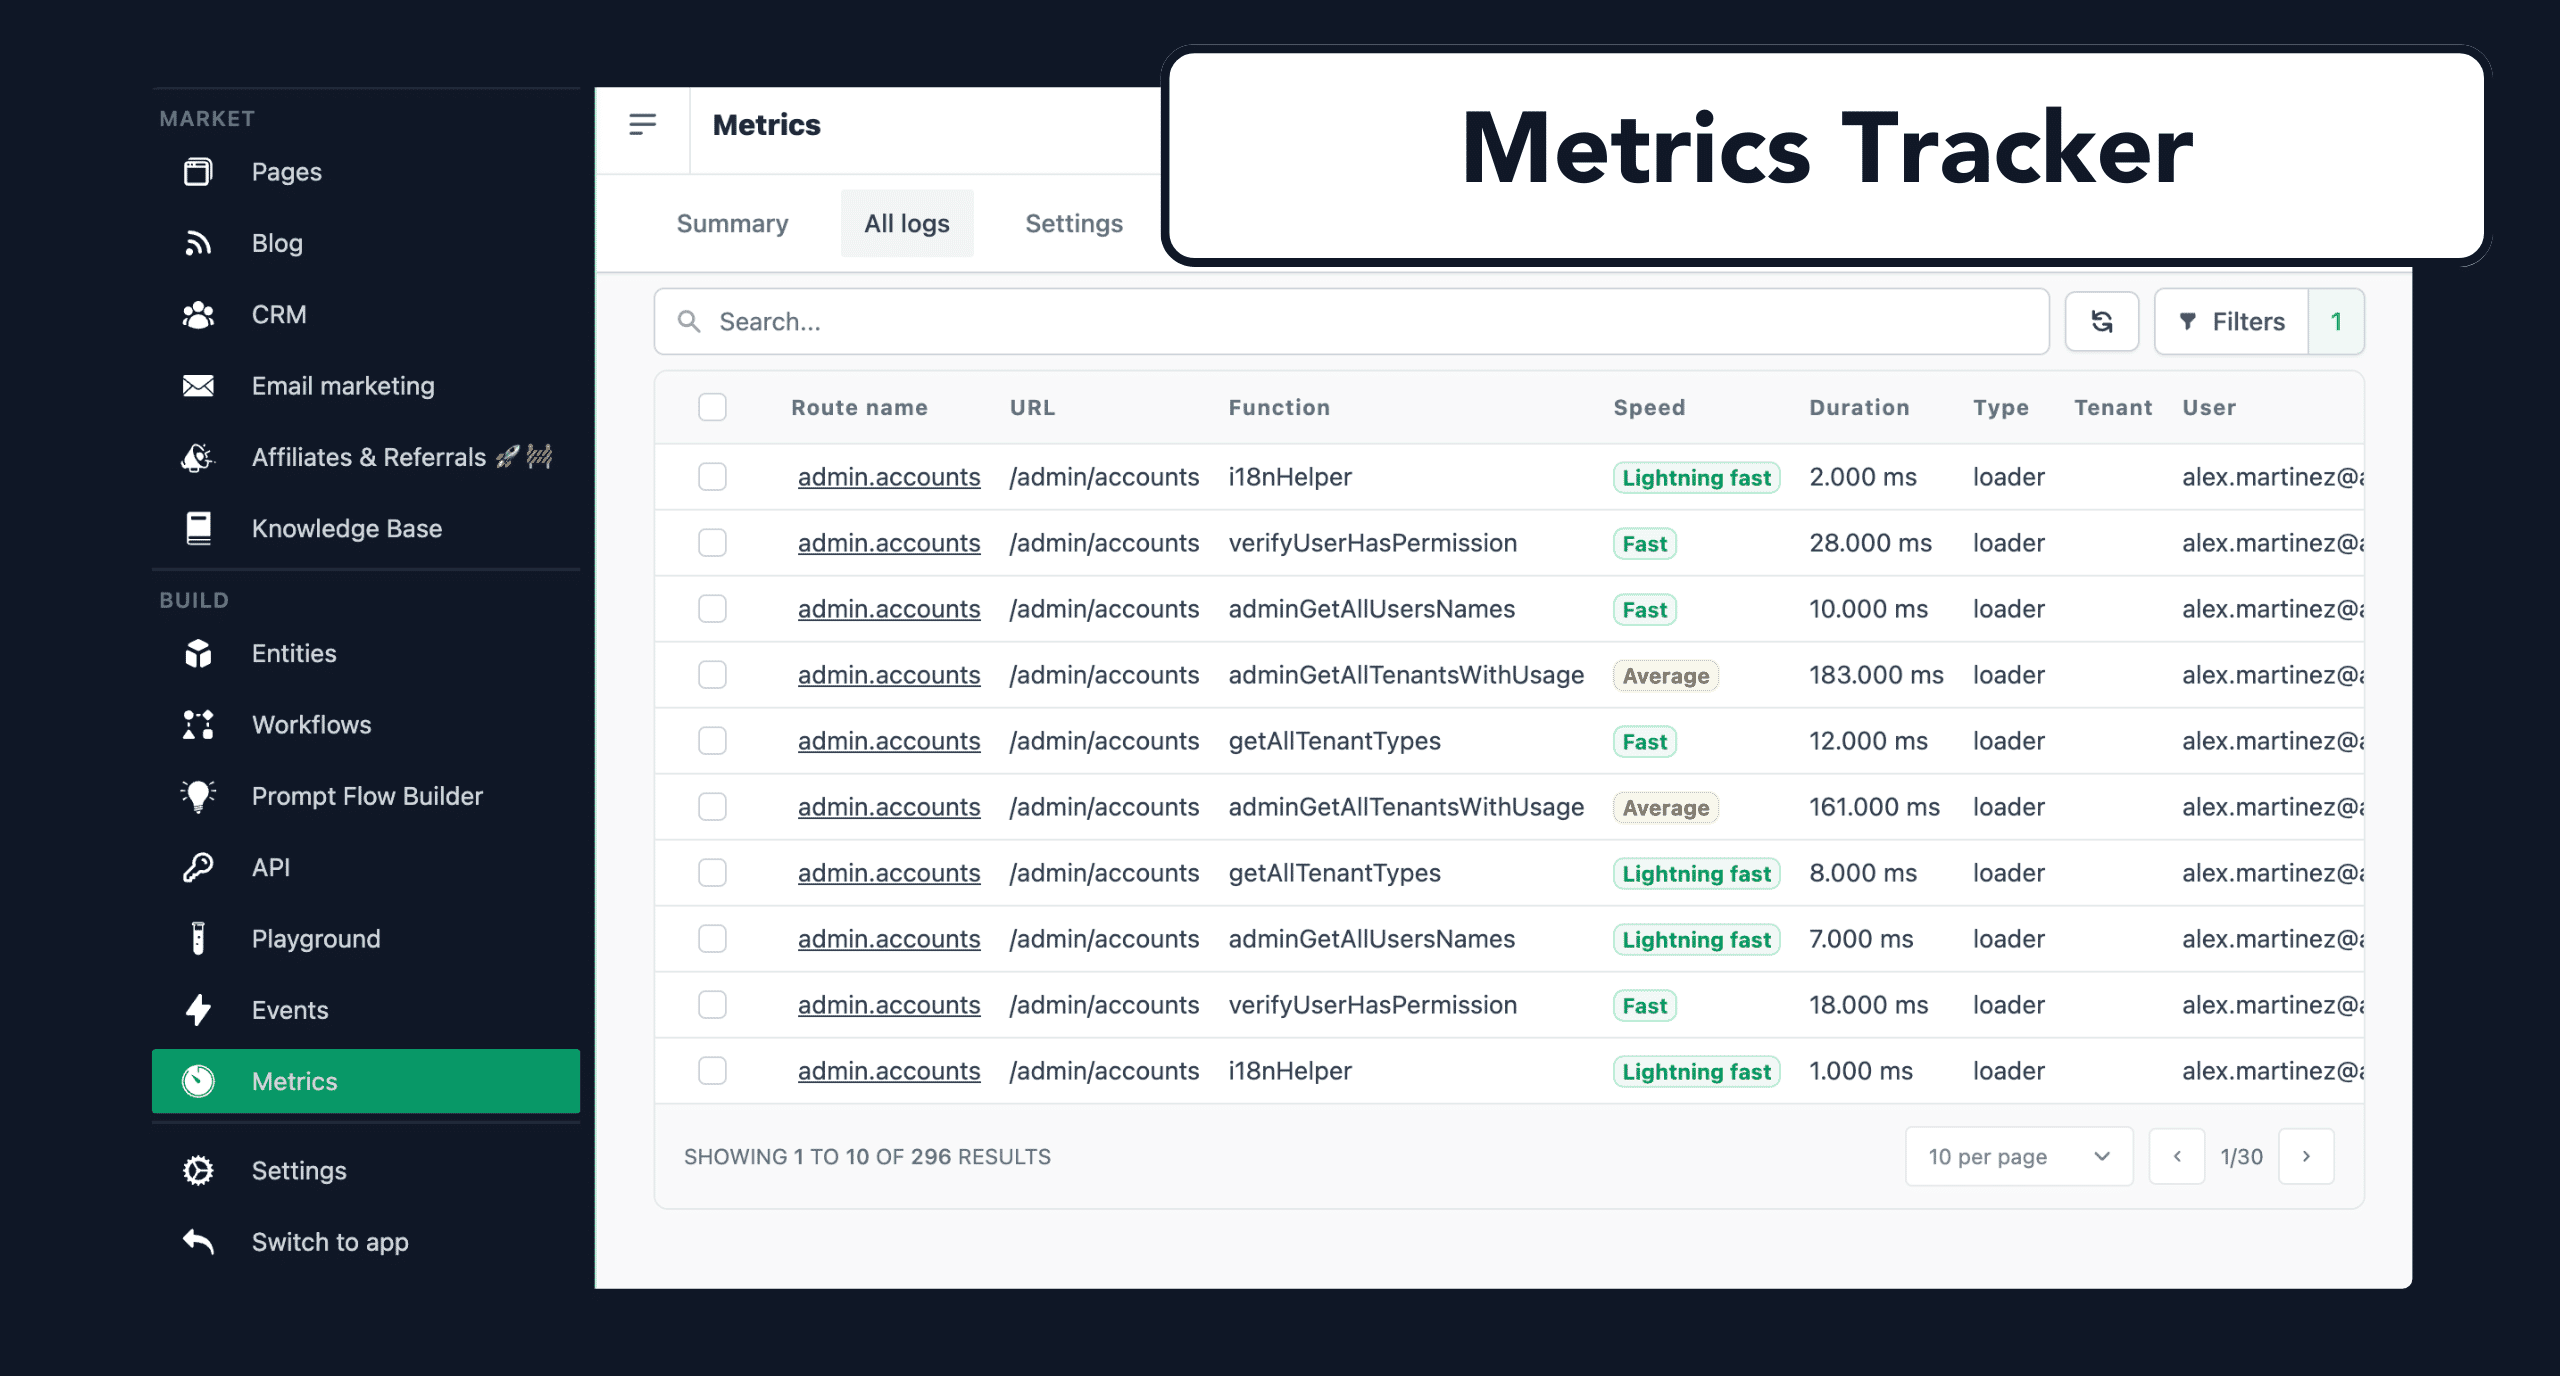 Metrics Tracker